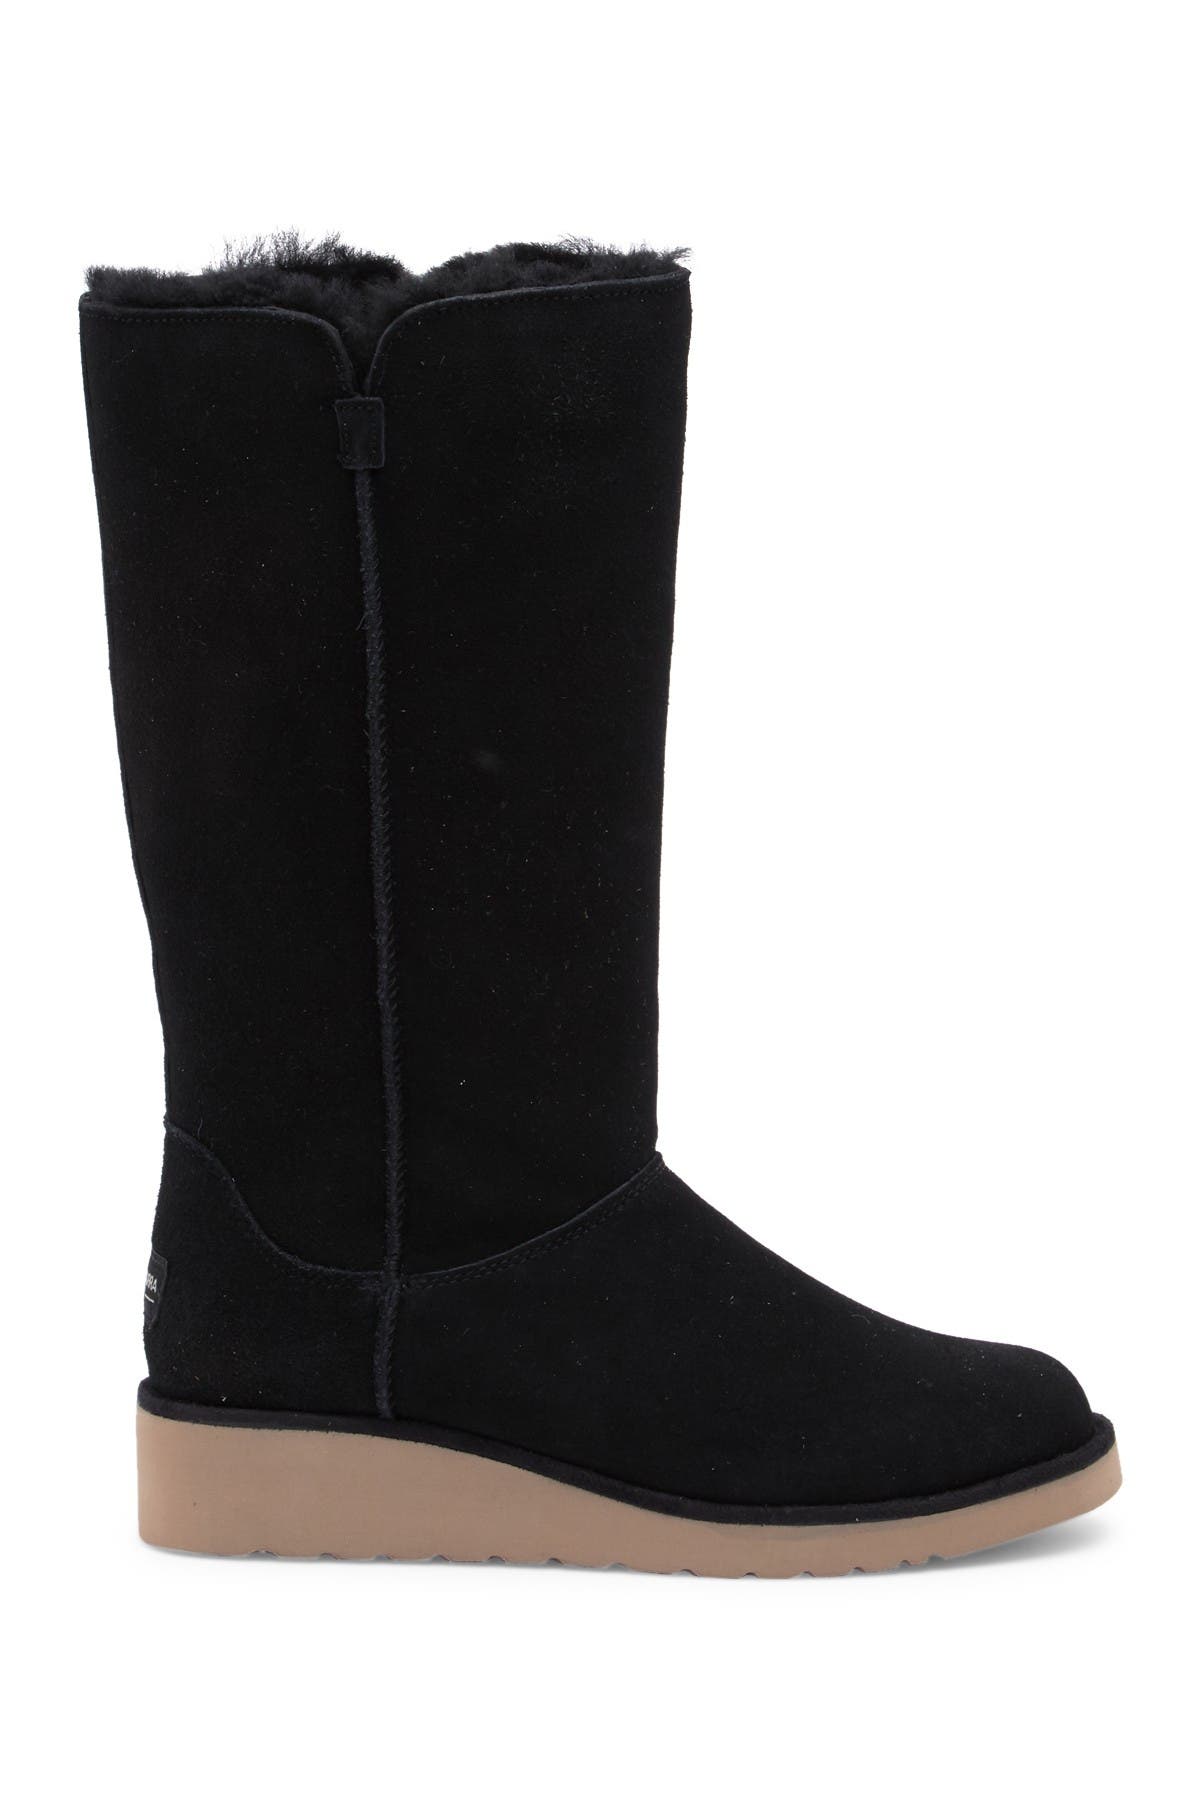 koolaburra by ugg women's classic slim tall winter boot